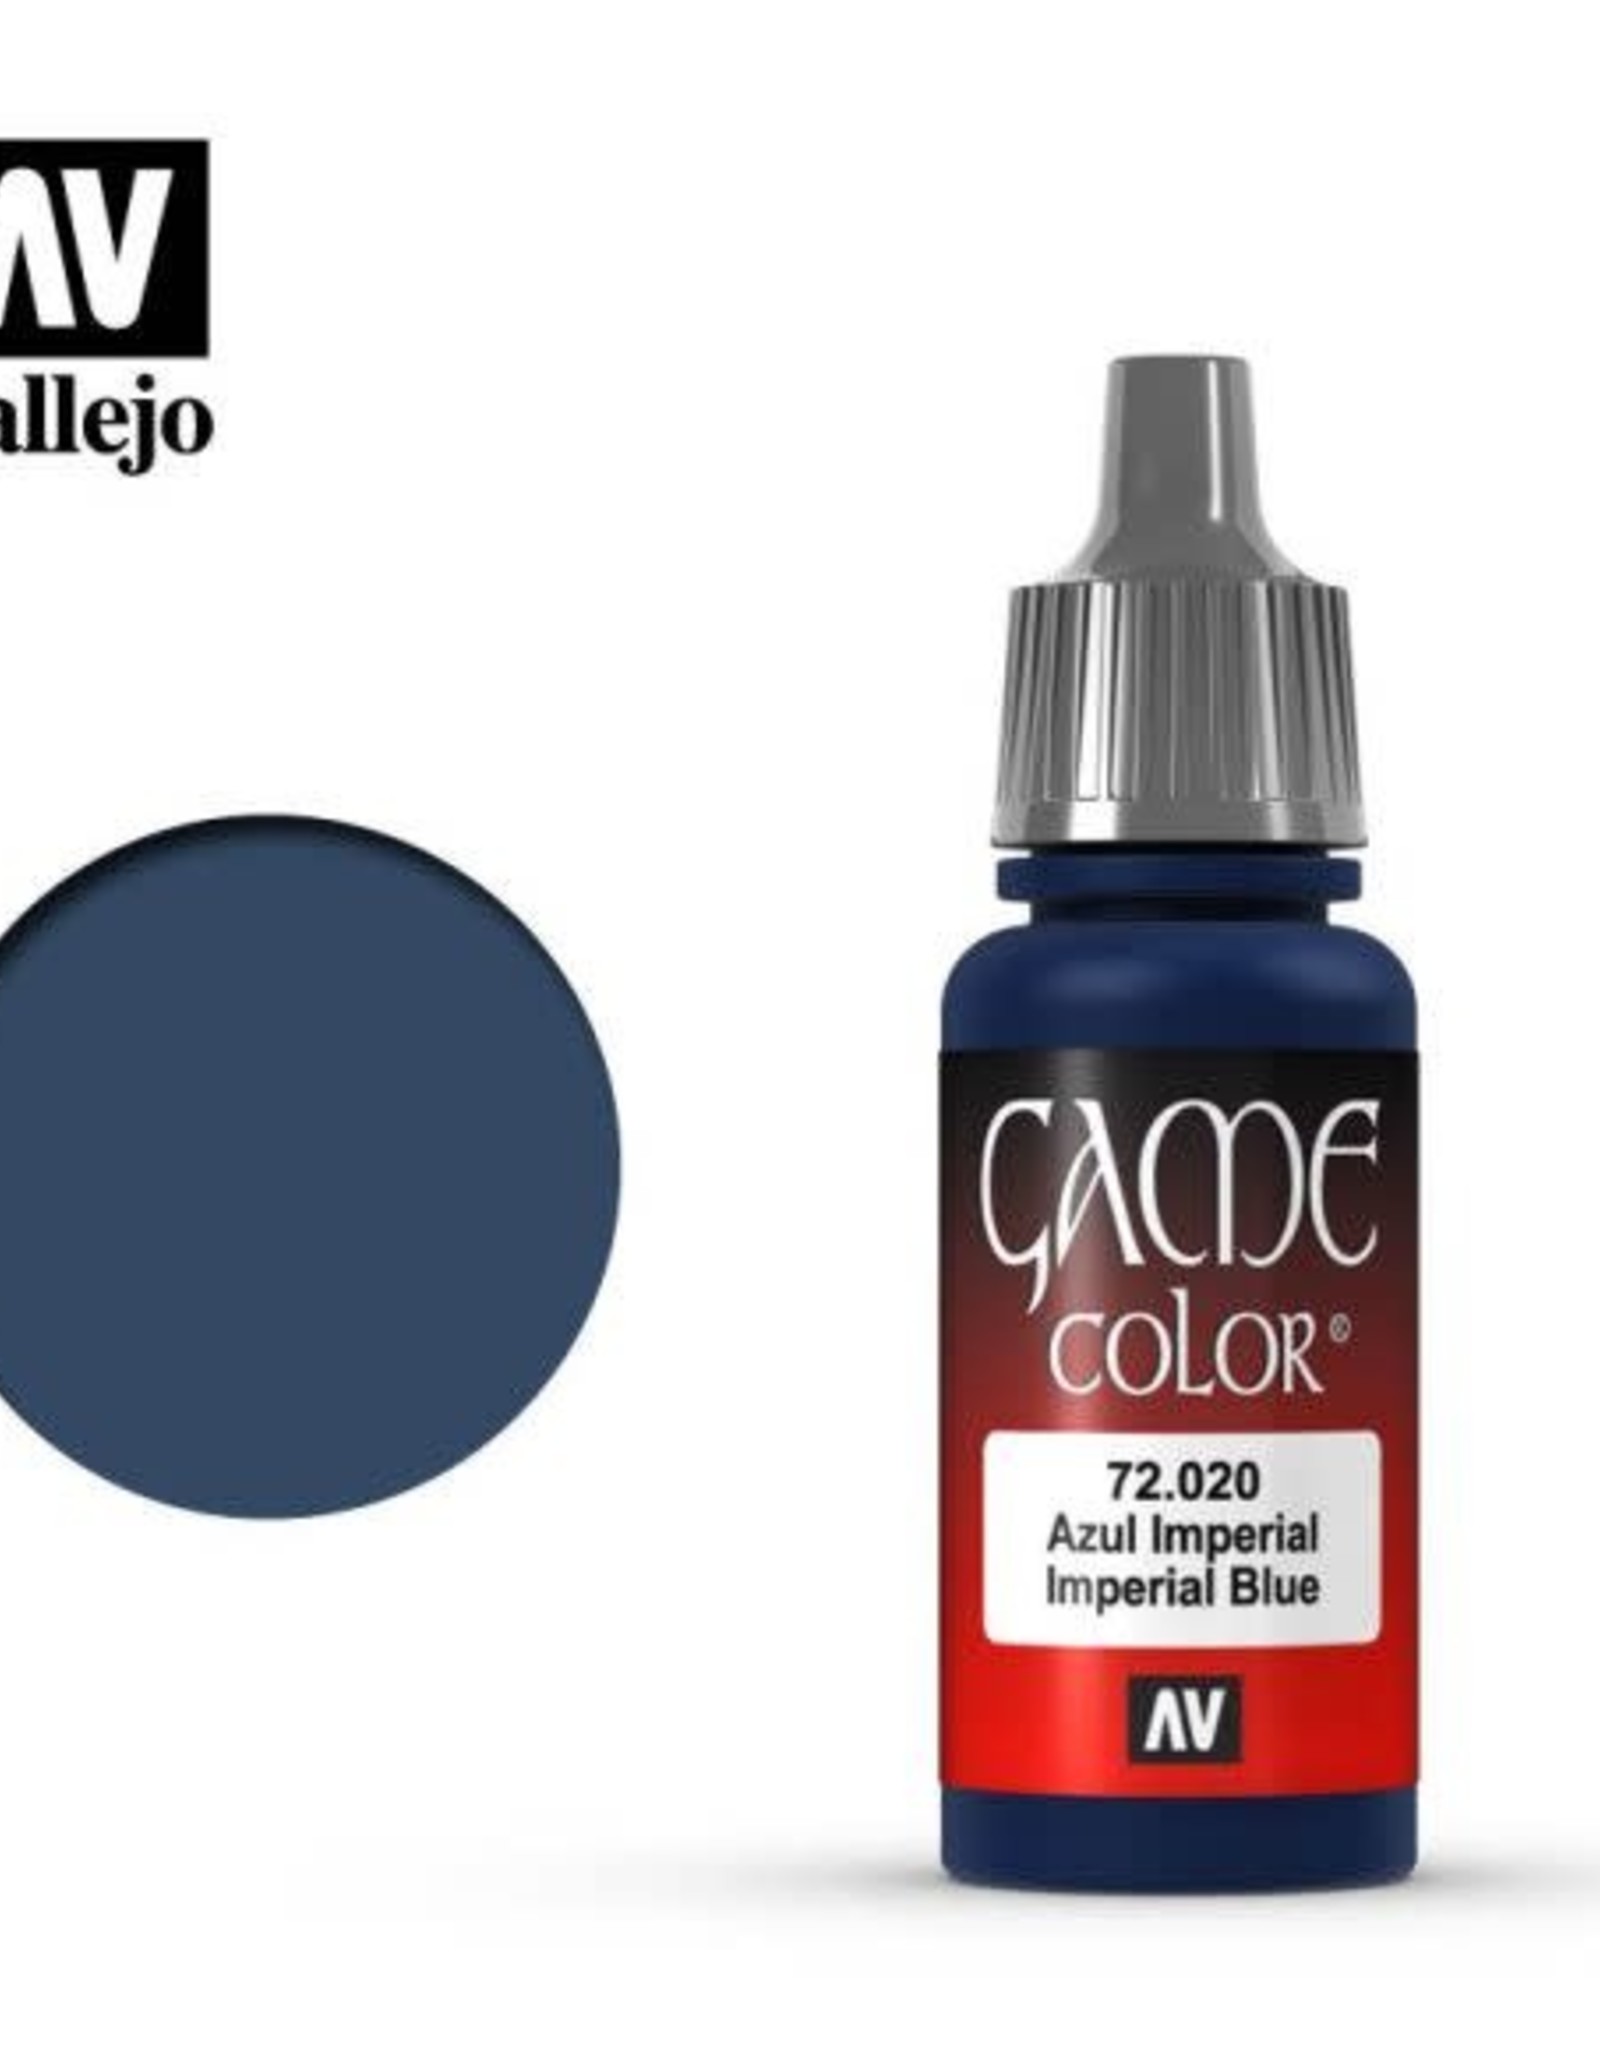 Acrylicos Vallejo AV GC: Imperial Blue 72.020 (17 ml)